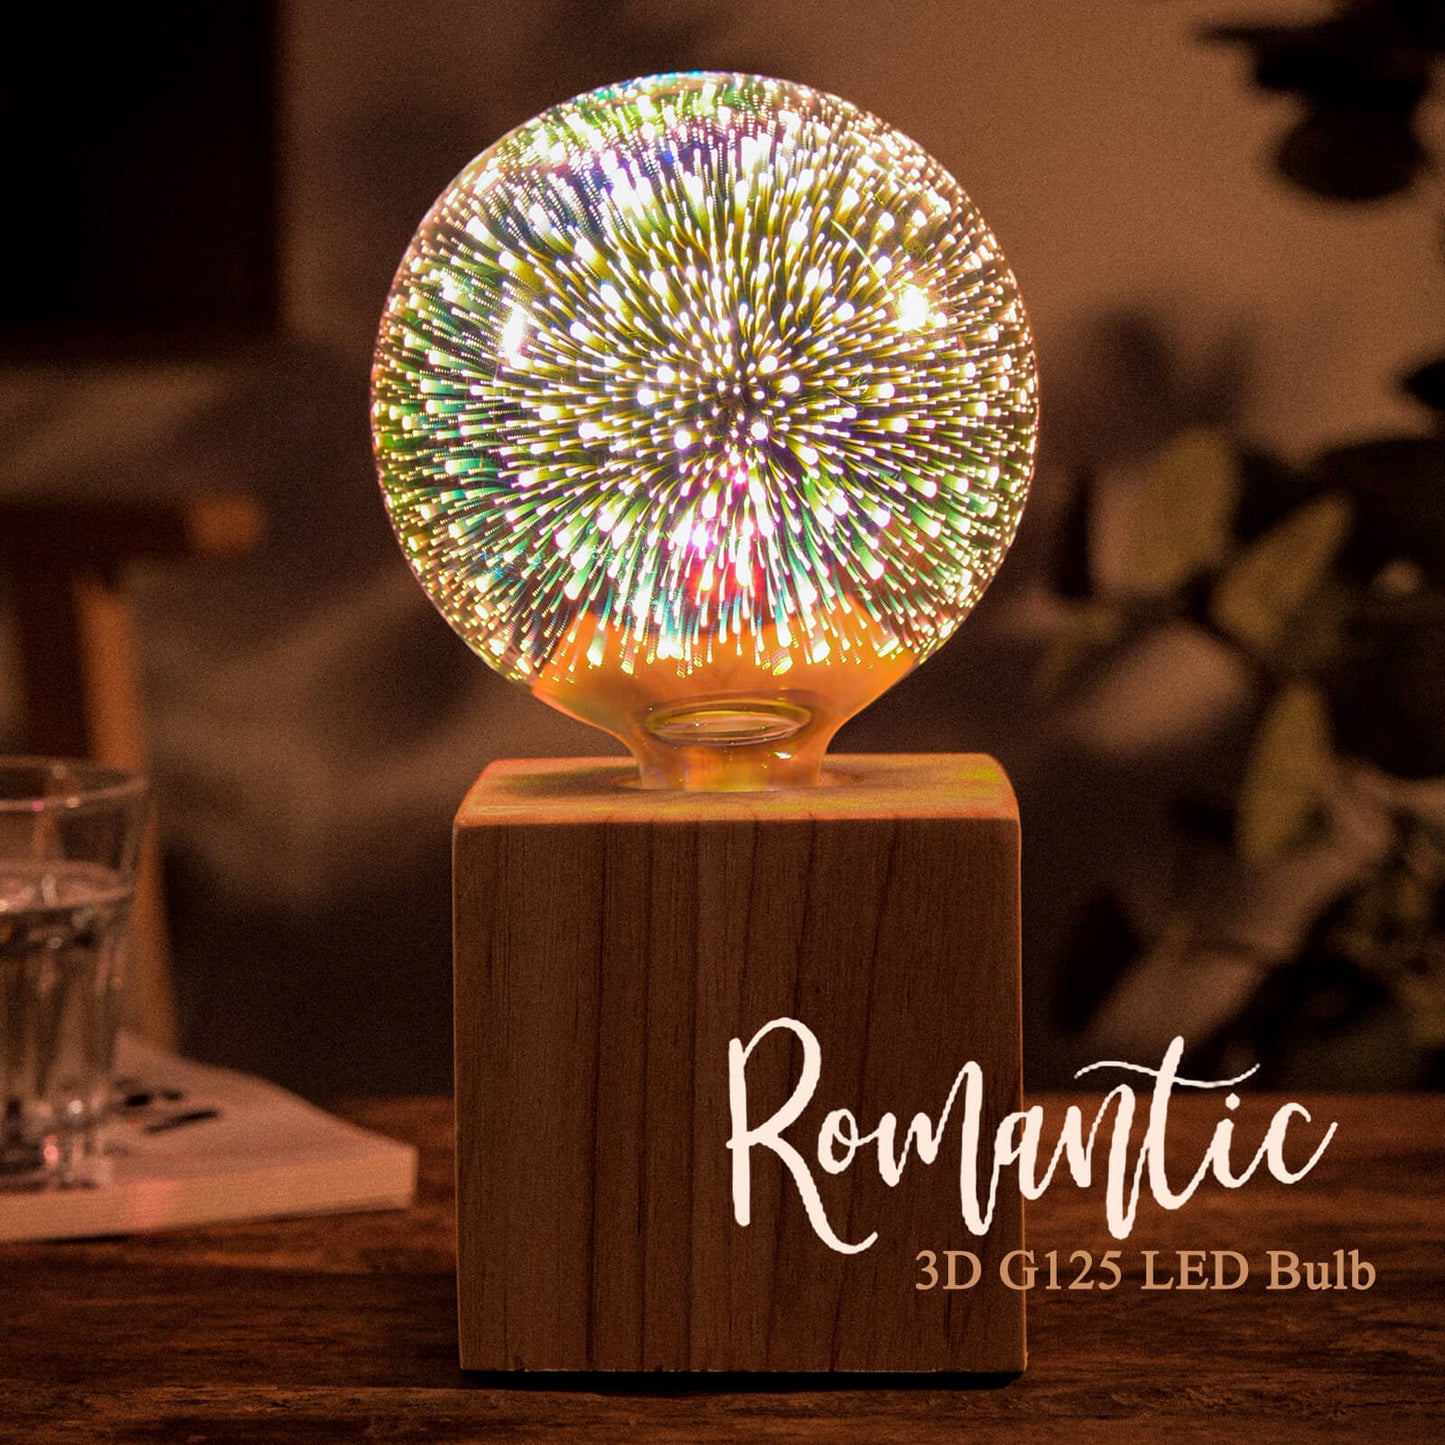 Porseme 3D Fireworks Decorative Light Bulb, E26 Base, 4W, AC100-240V, Glass Bulbs with Soft Warm Light, Shiny Decor for Home, Bedroom, Party (Included 2-Pack G125 Bulbs)